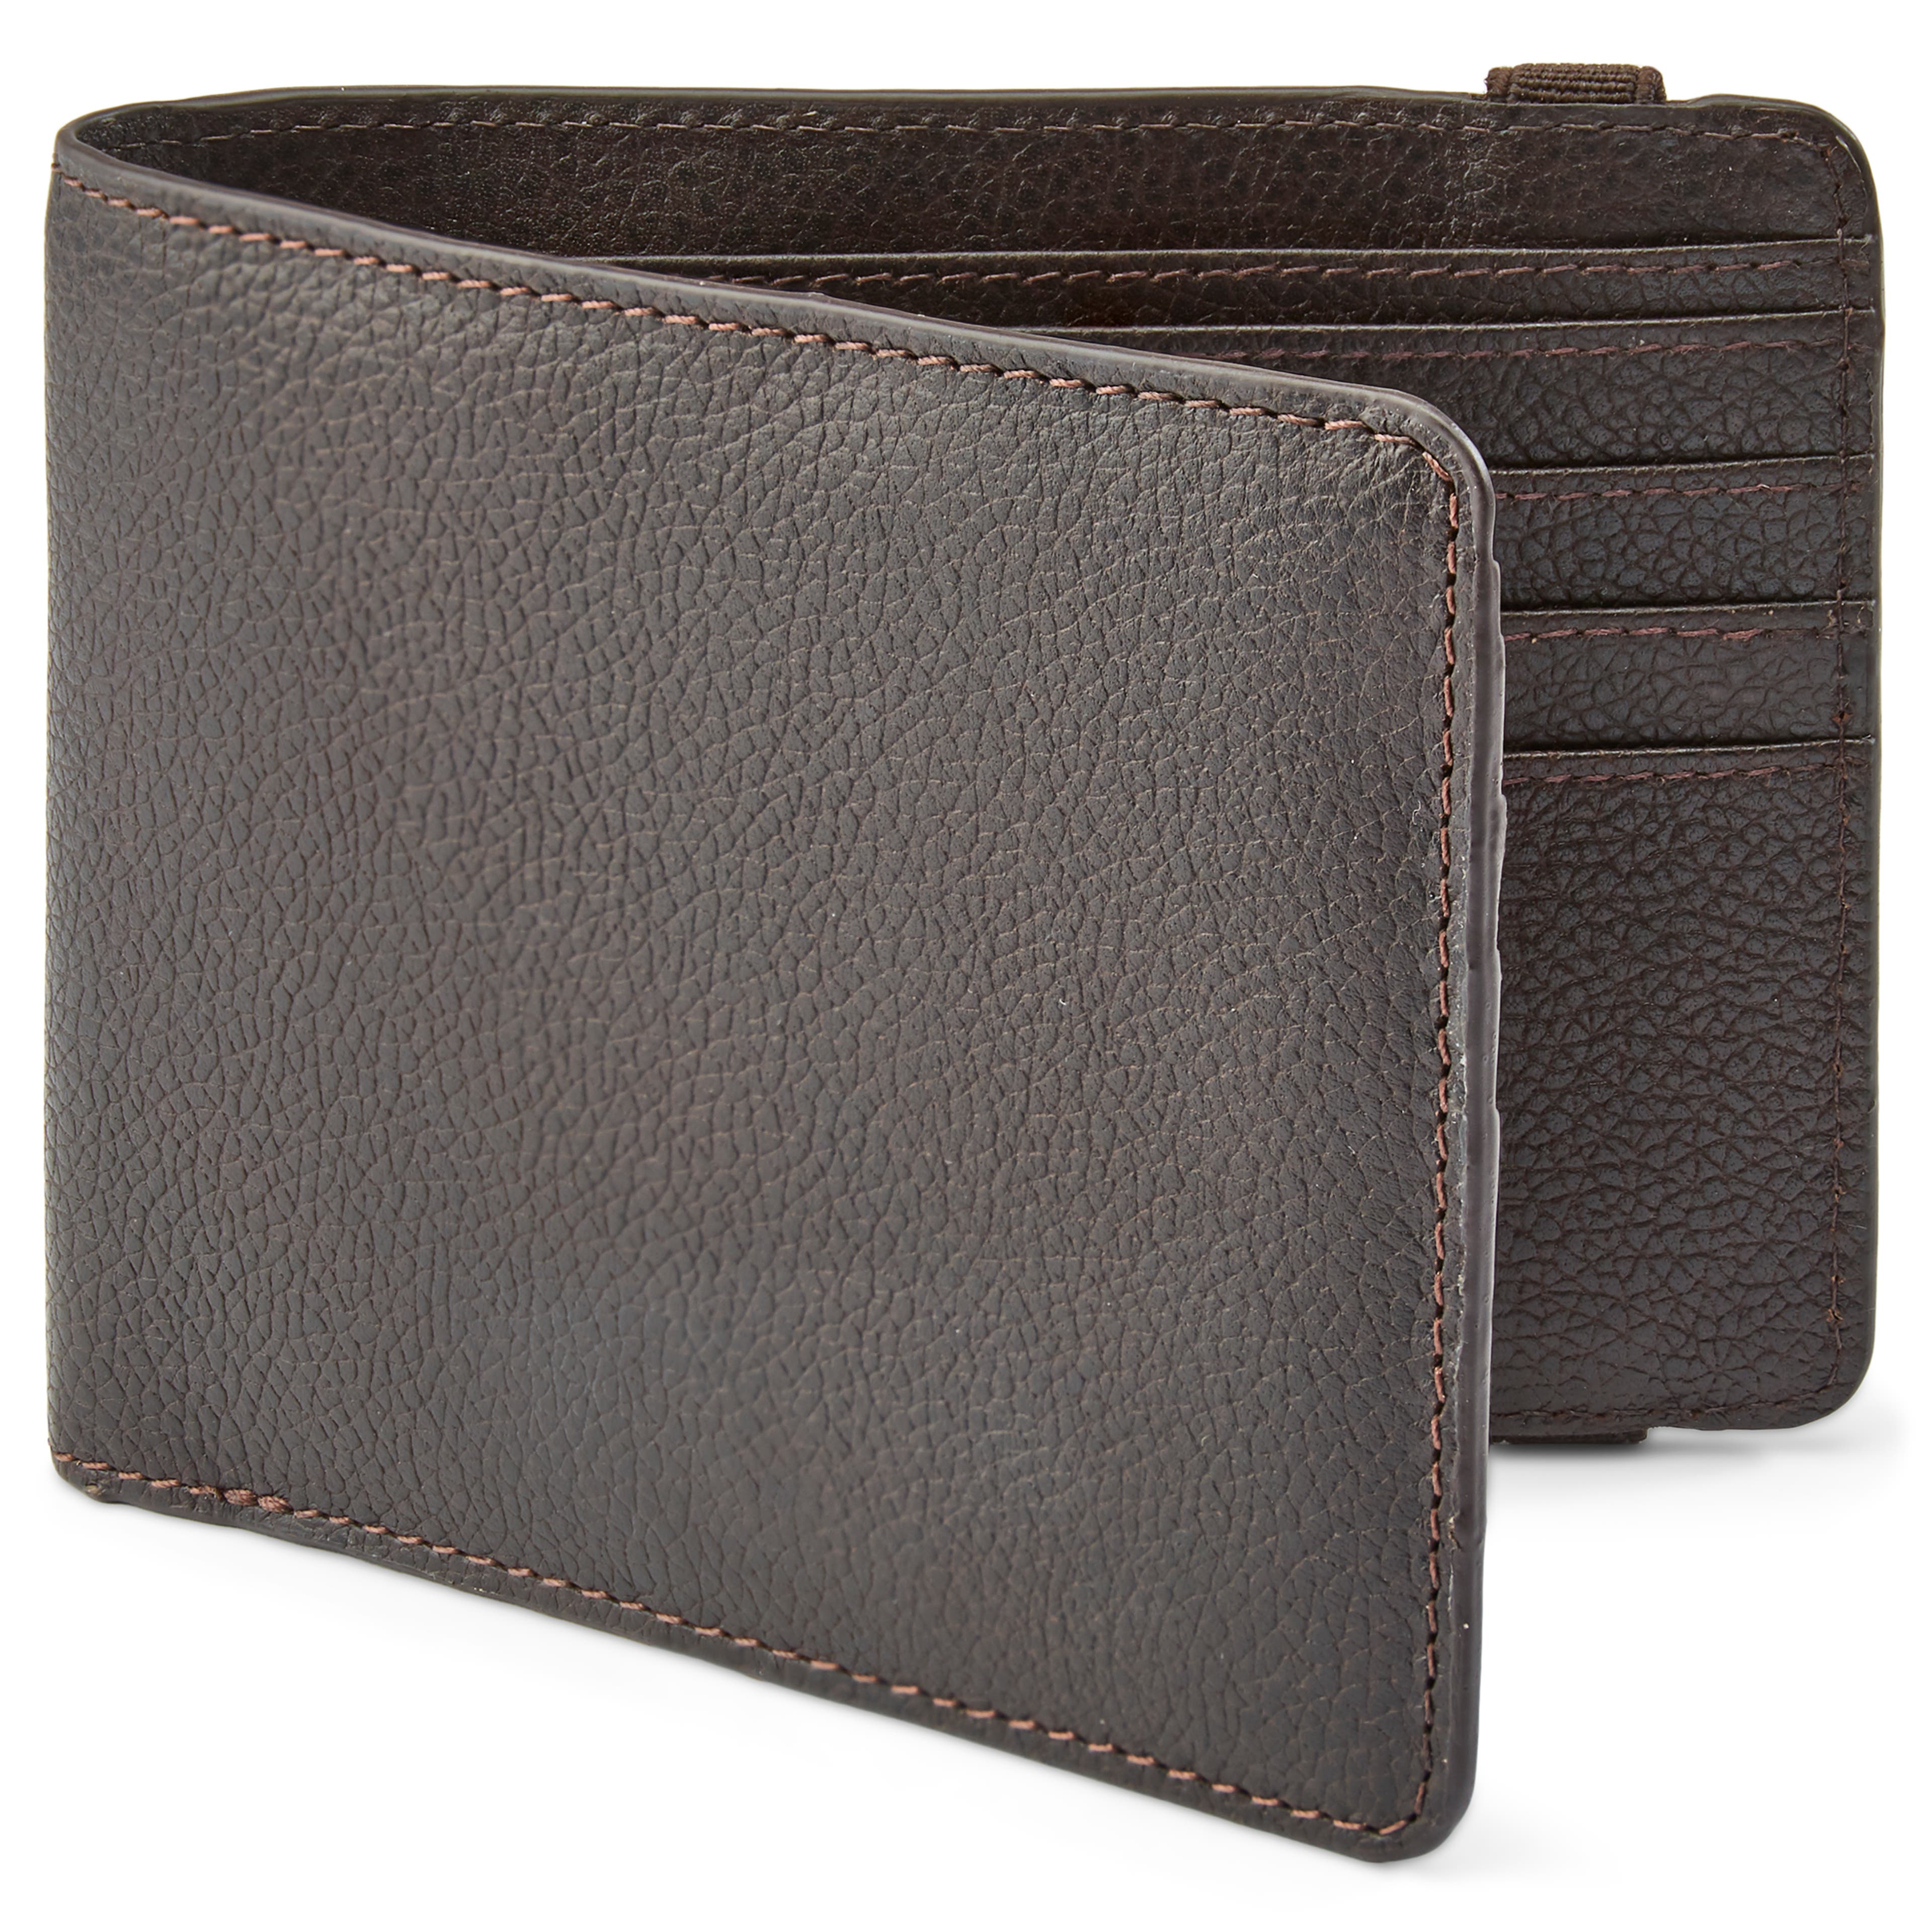 Dark-Brown Leather RFID-Blocking Wallet